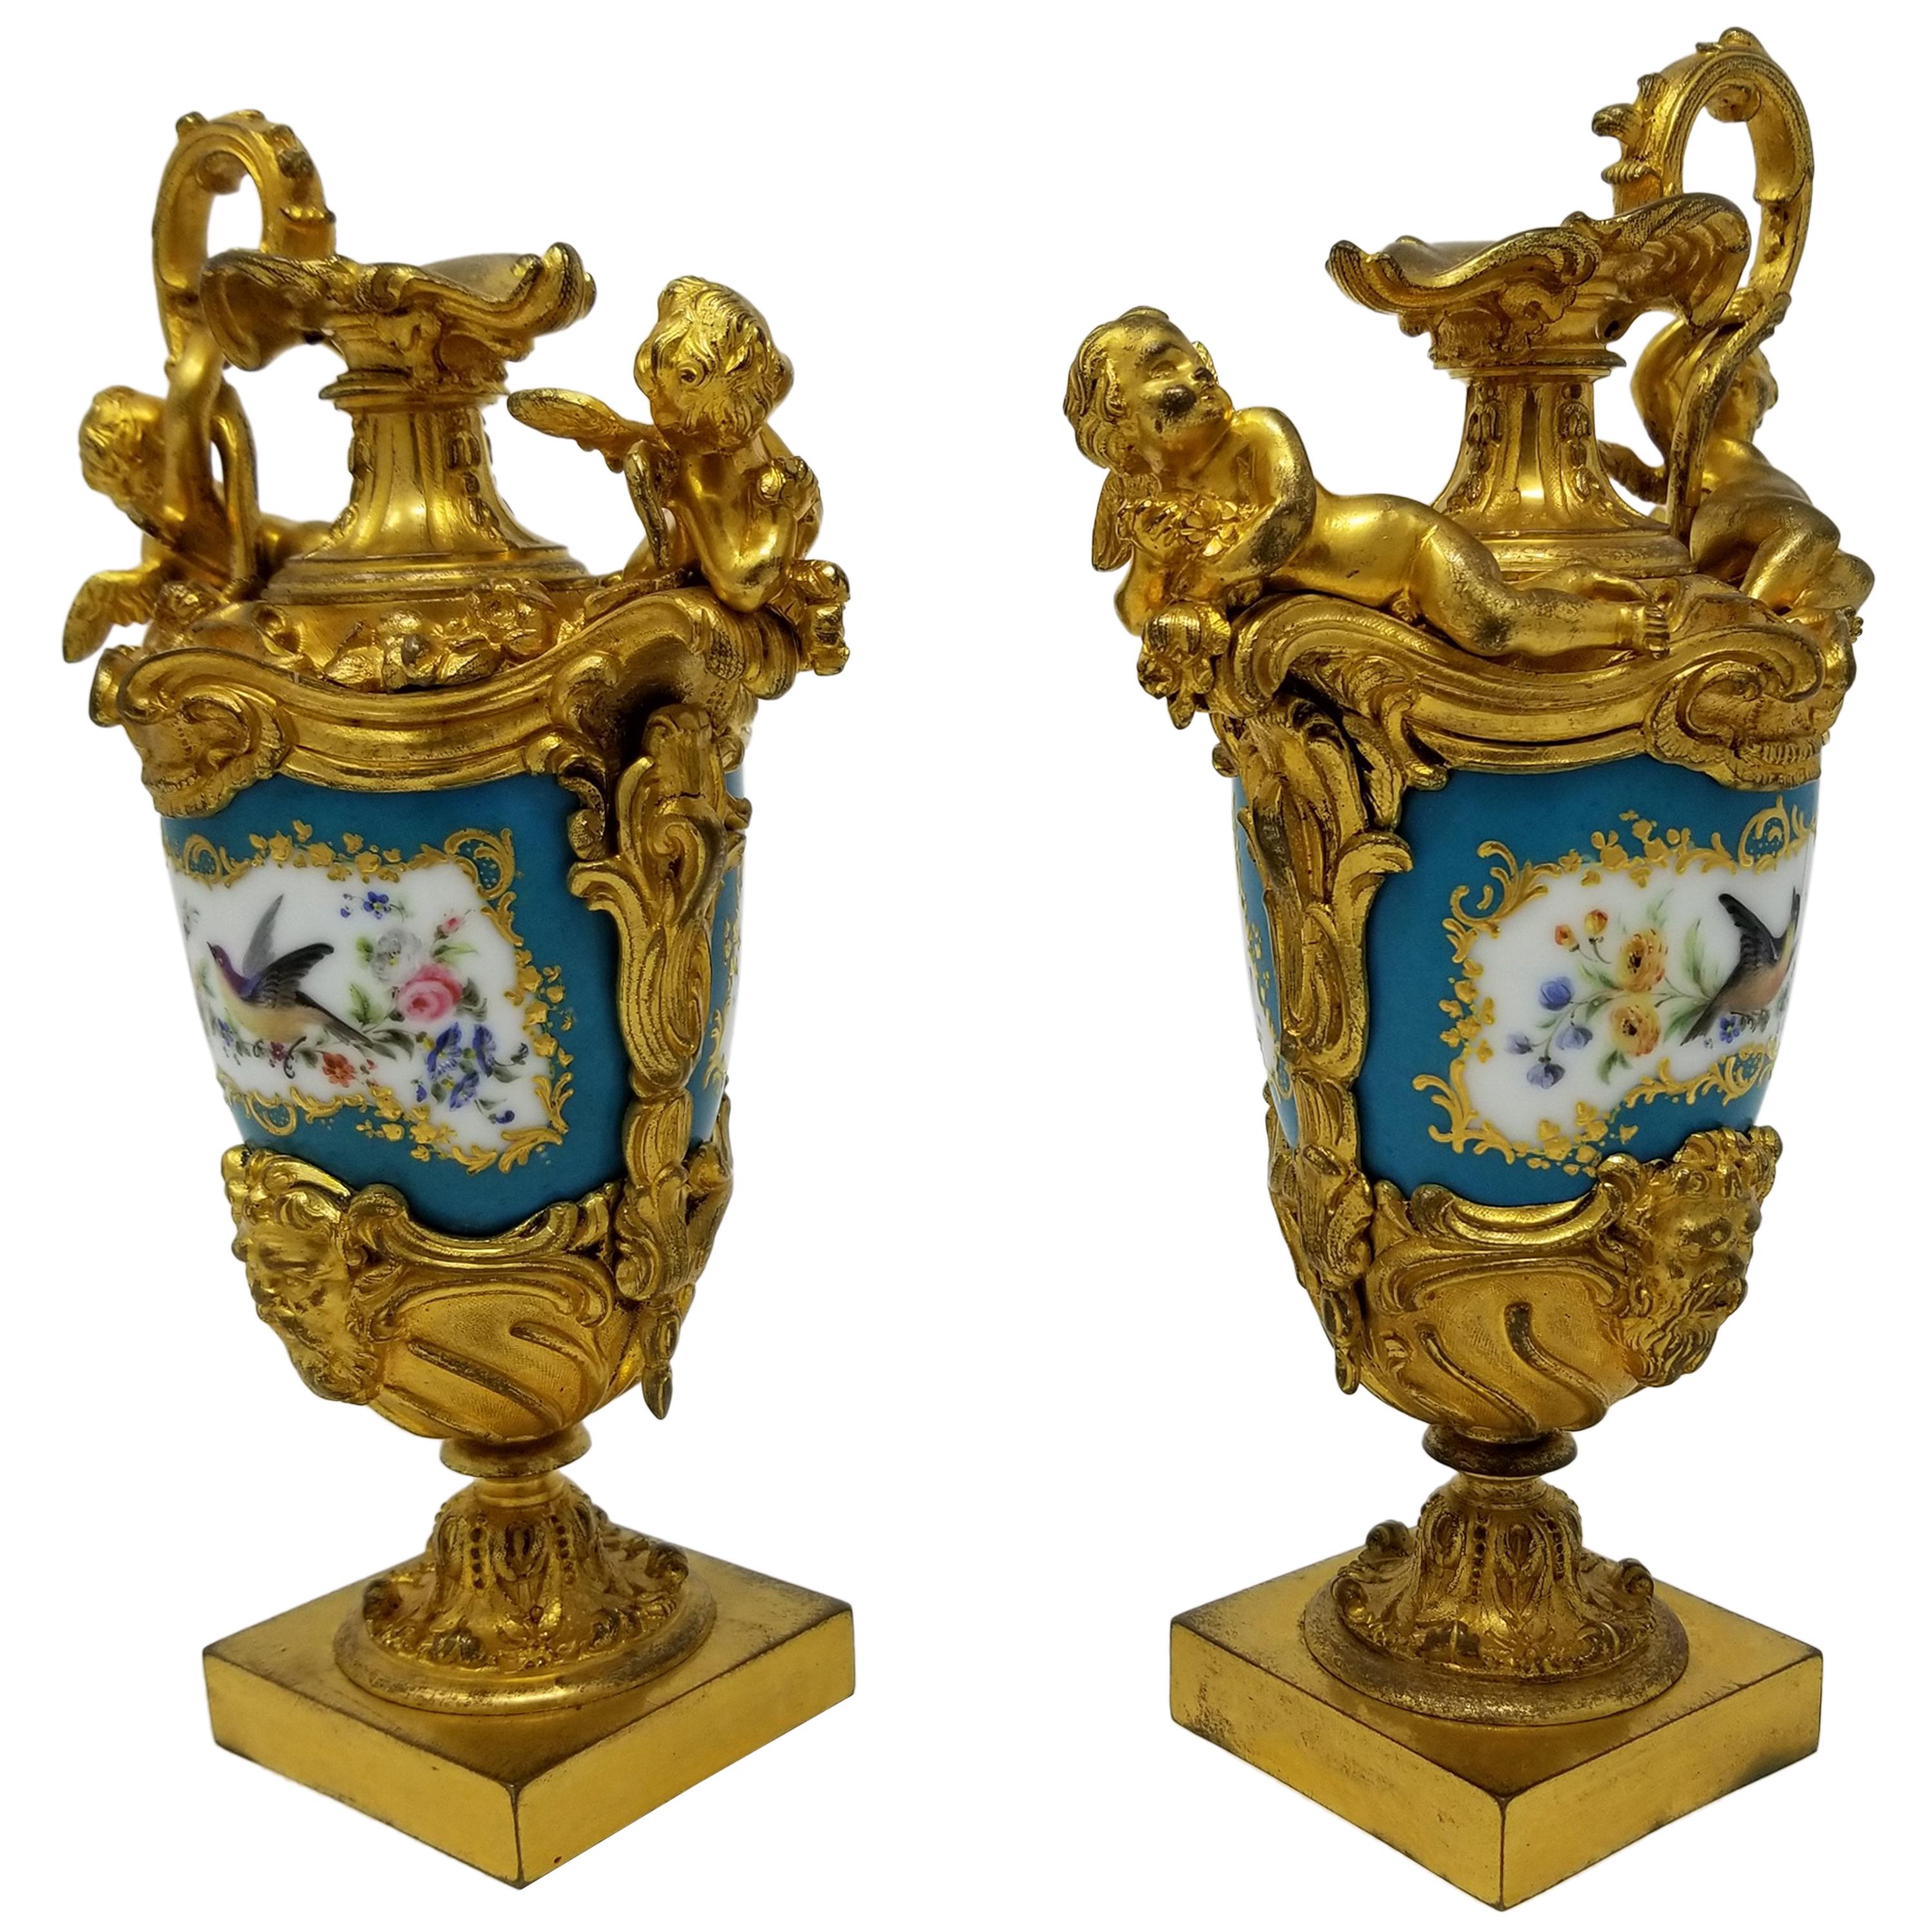 Fine 19th Century French Sèvres Style Porcelain & Doré Bronze-Mounted Ewers